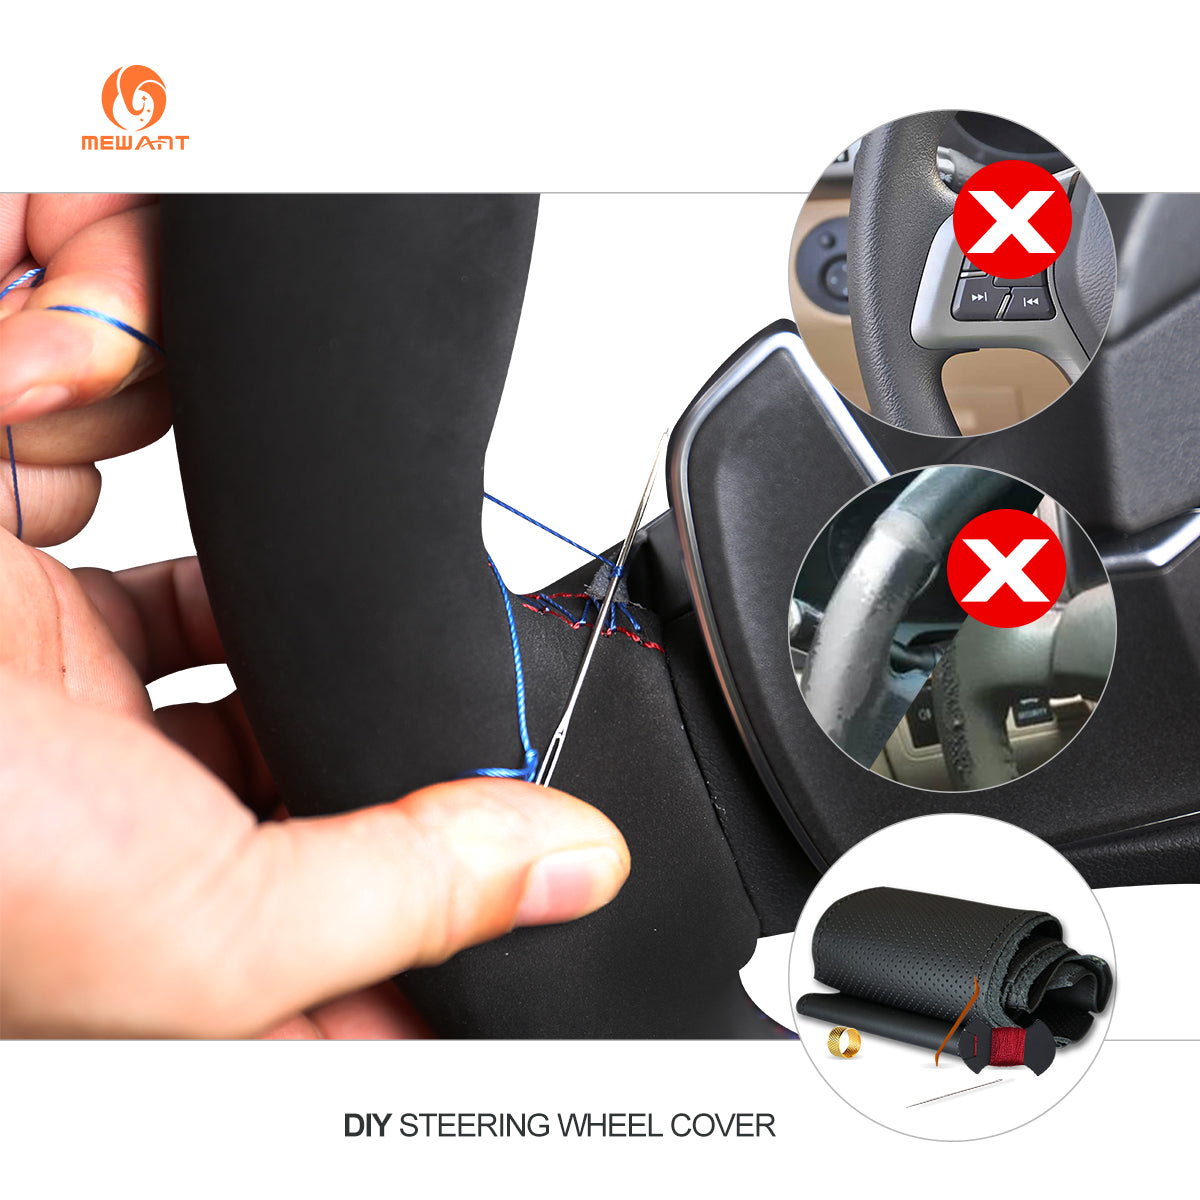  SAXTZDS Car DIY Steering Wheel Cover,Fit for Peugeot 208  2012-2018 2008 2013-2018 308 308sw 2014-2018 : Automotive